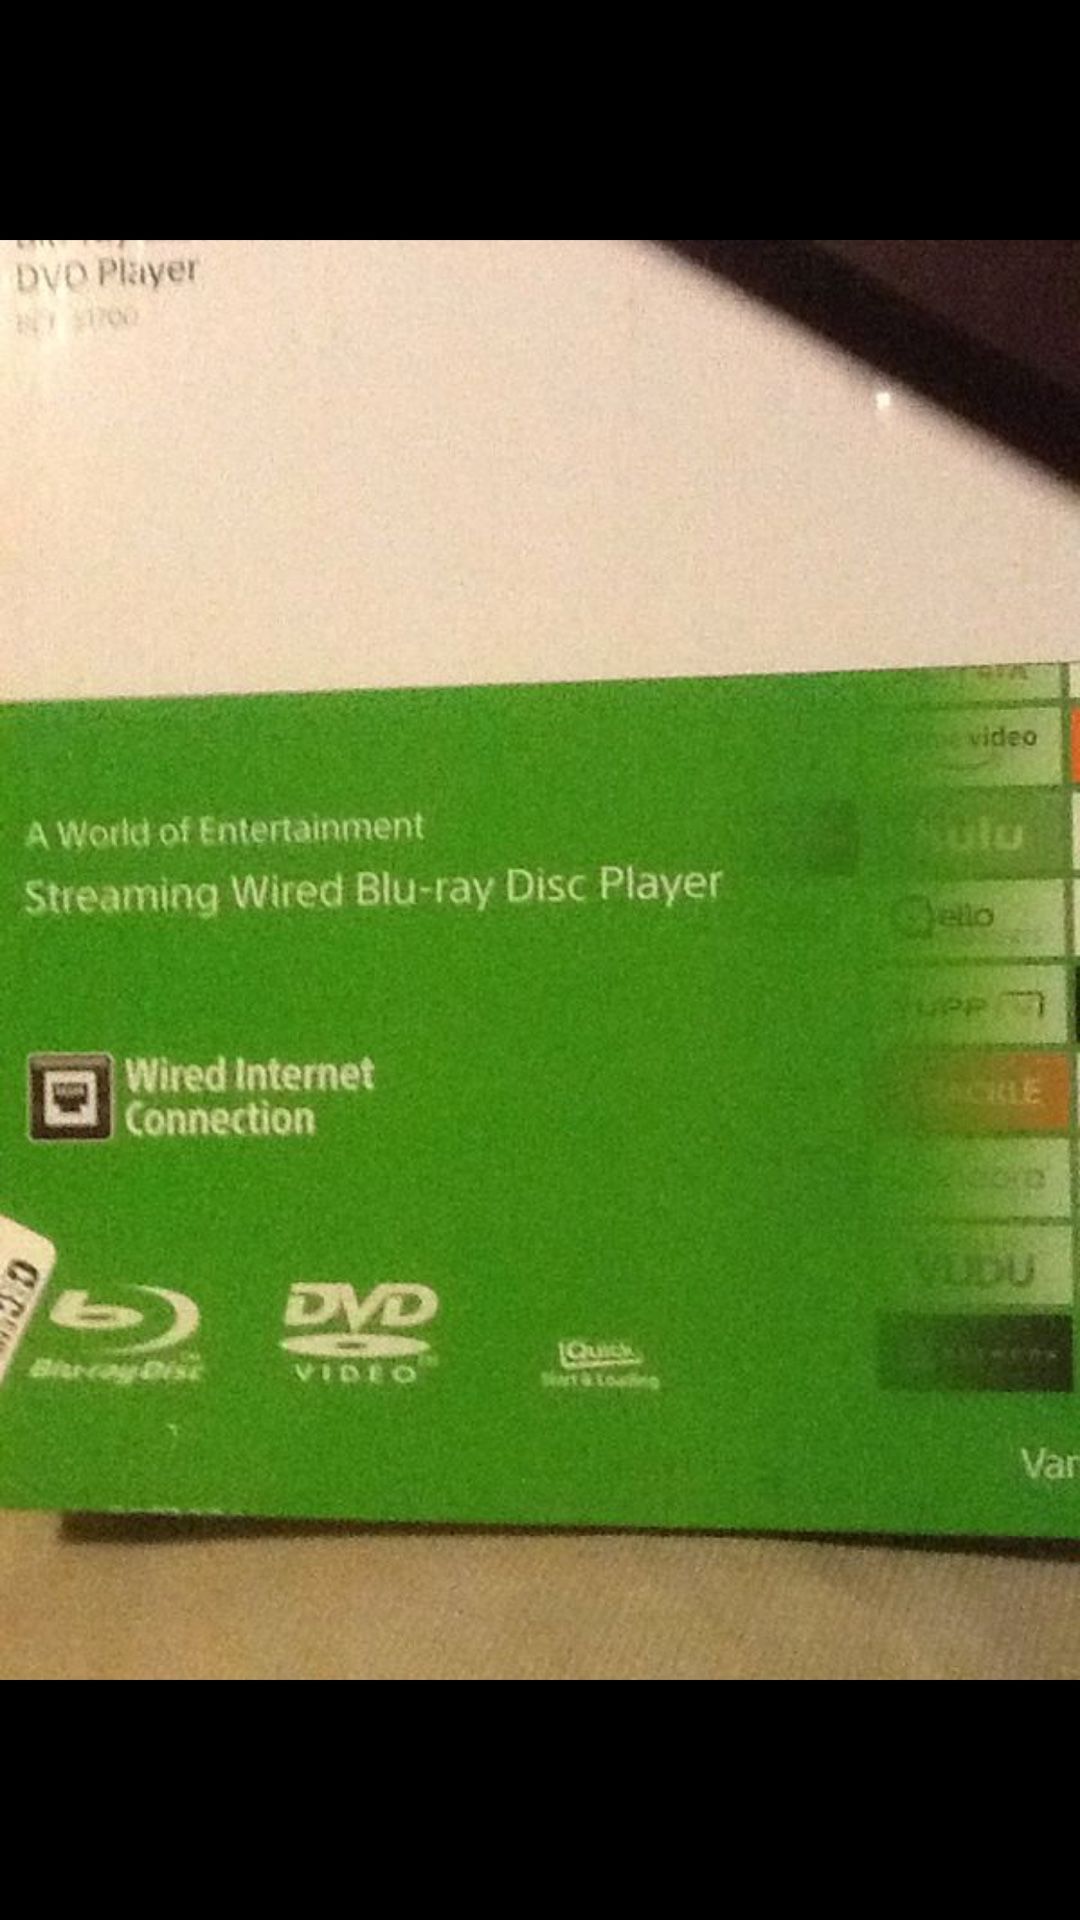 Sony Wired Blu-Ray DVD player